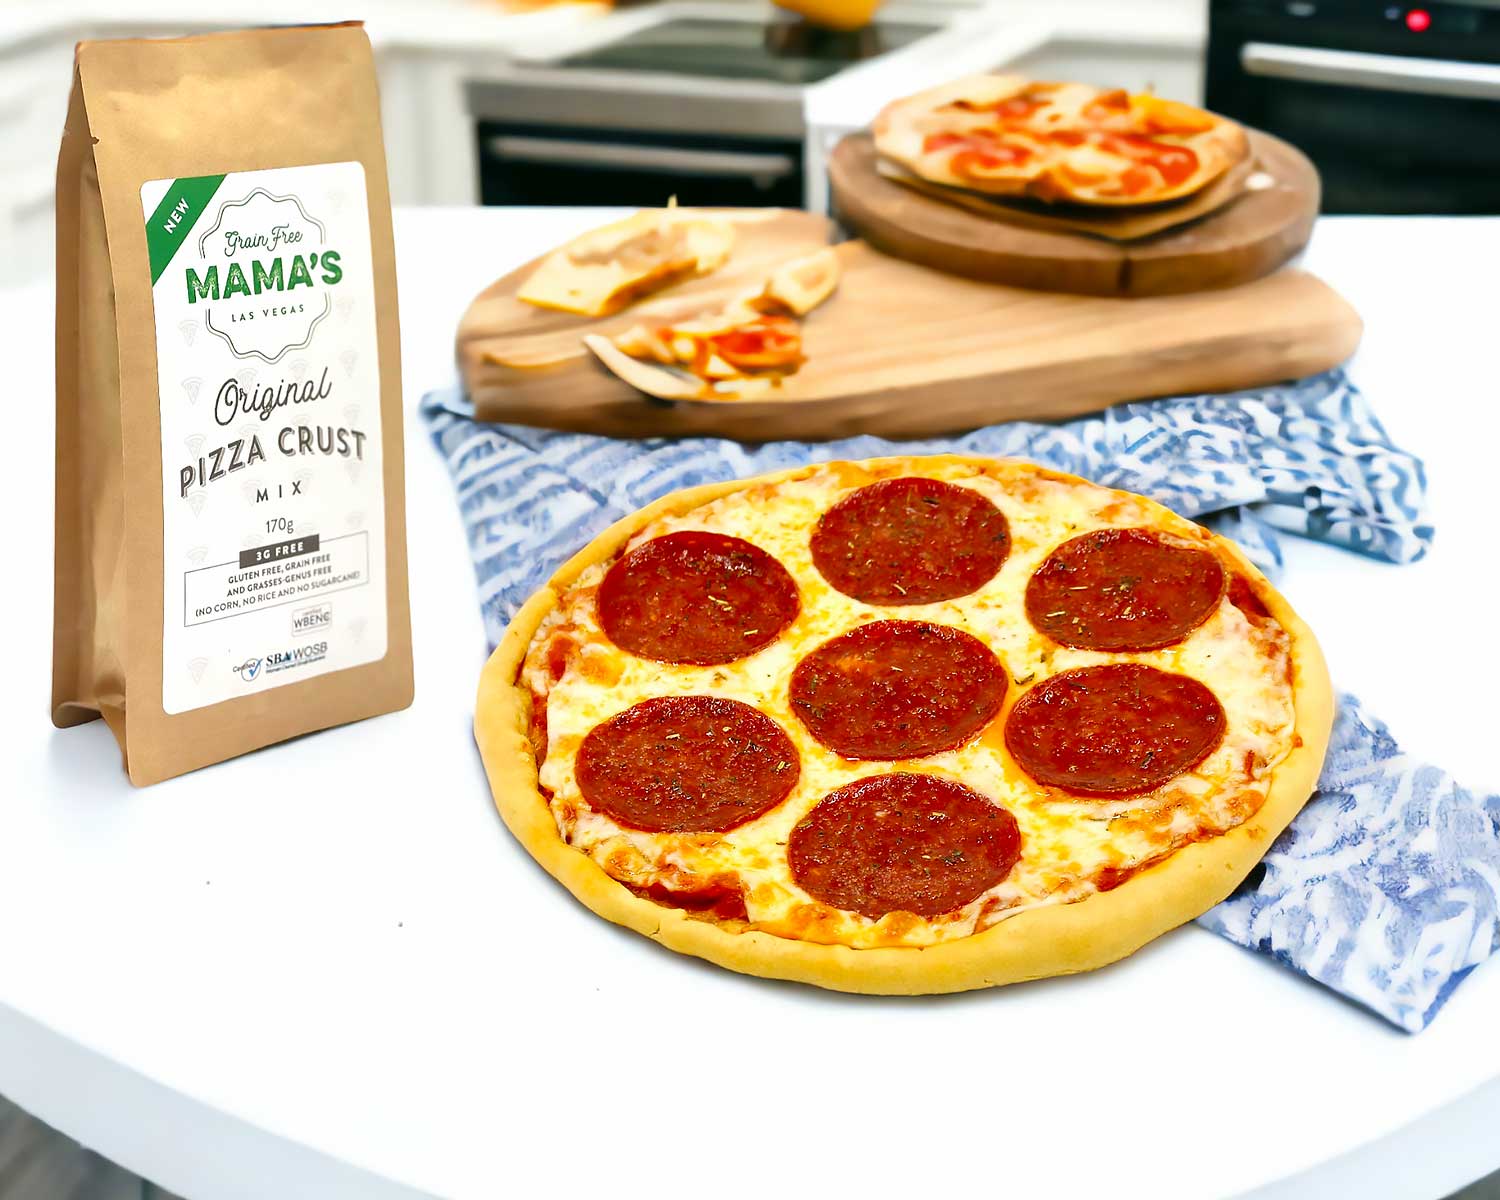 Gourmet Grain Free Mama's Original Pizza Crust Mix